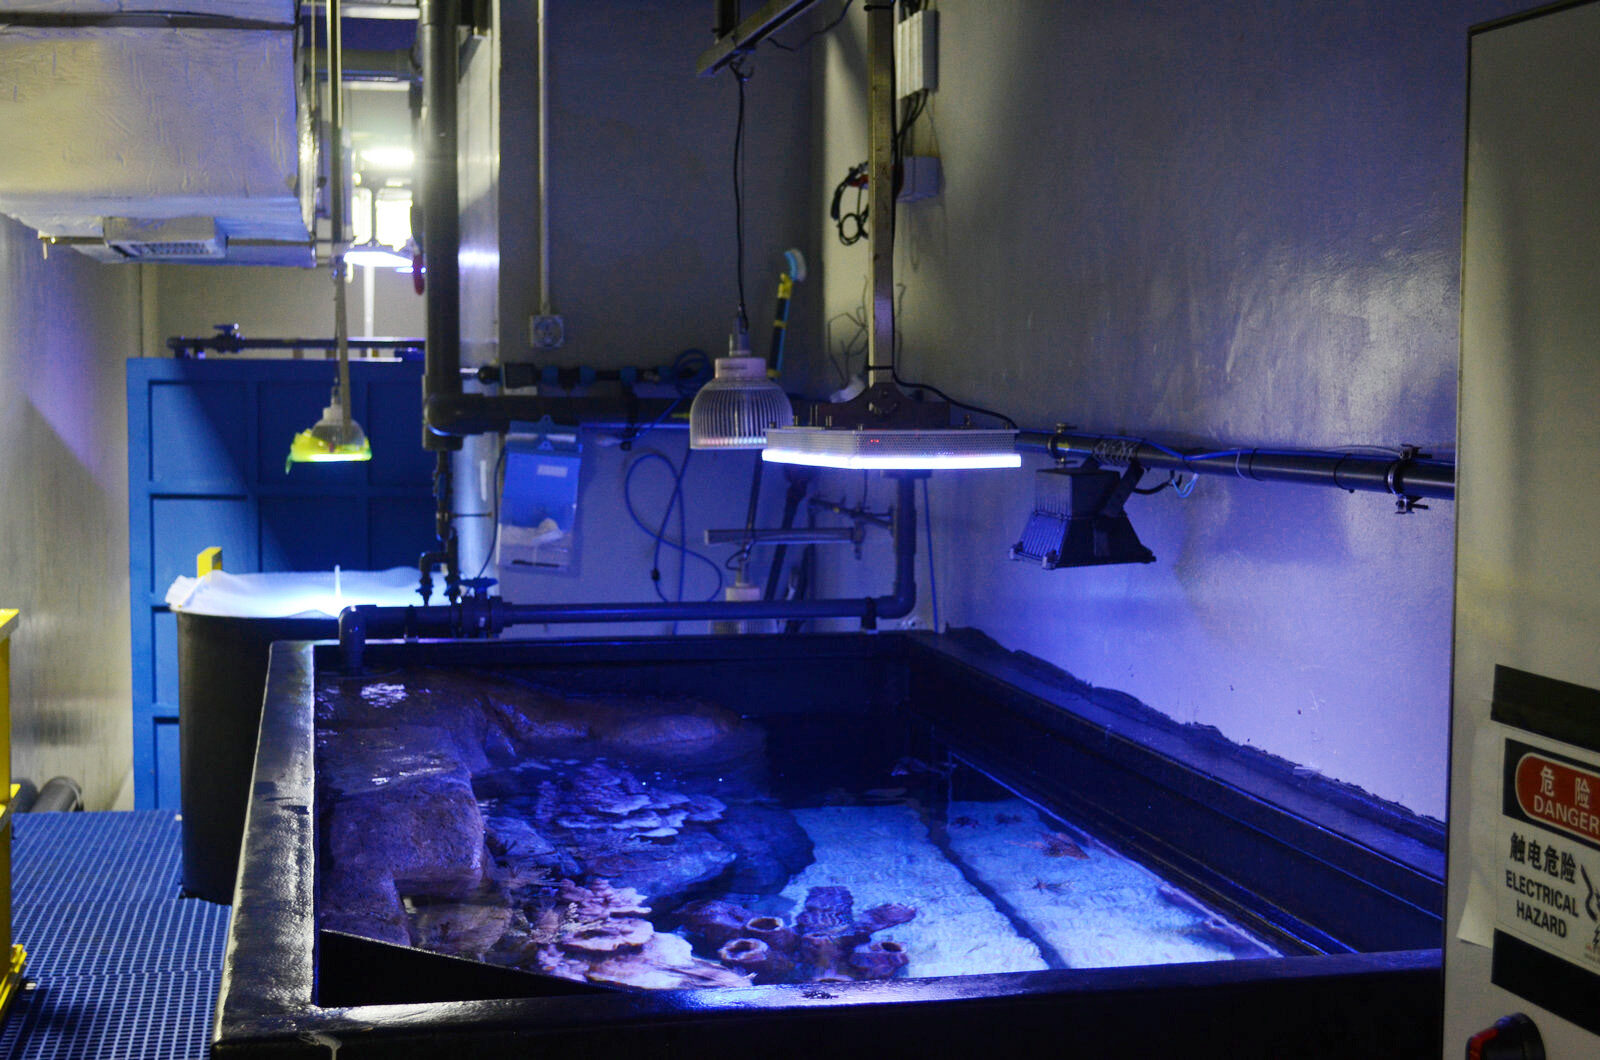 acquario pubblico di barriera corallina luci a led orphek atlantik